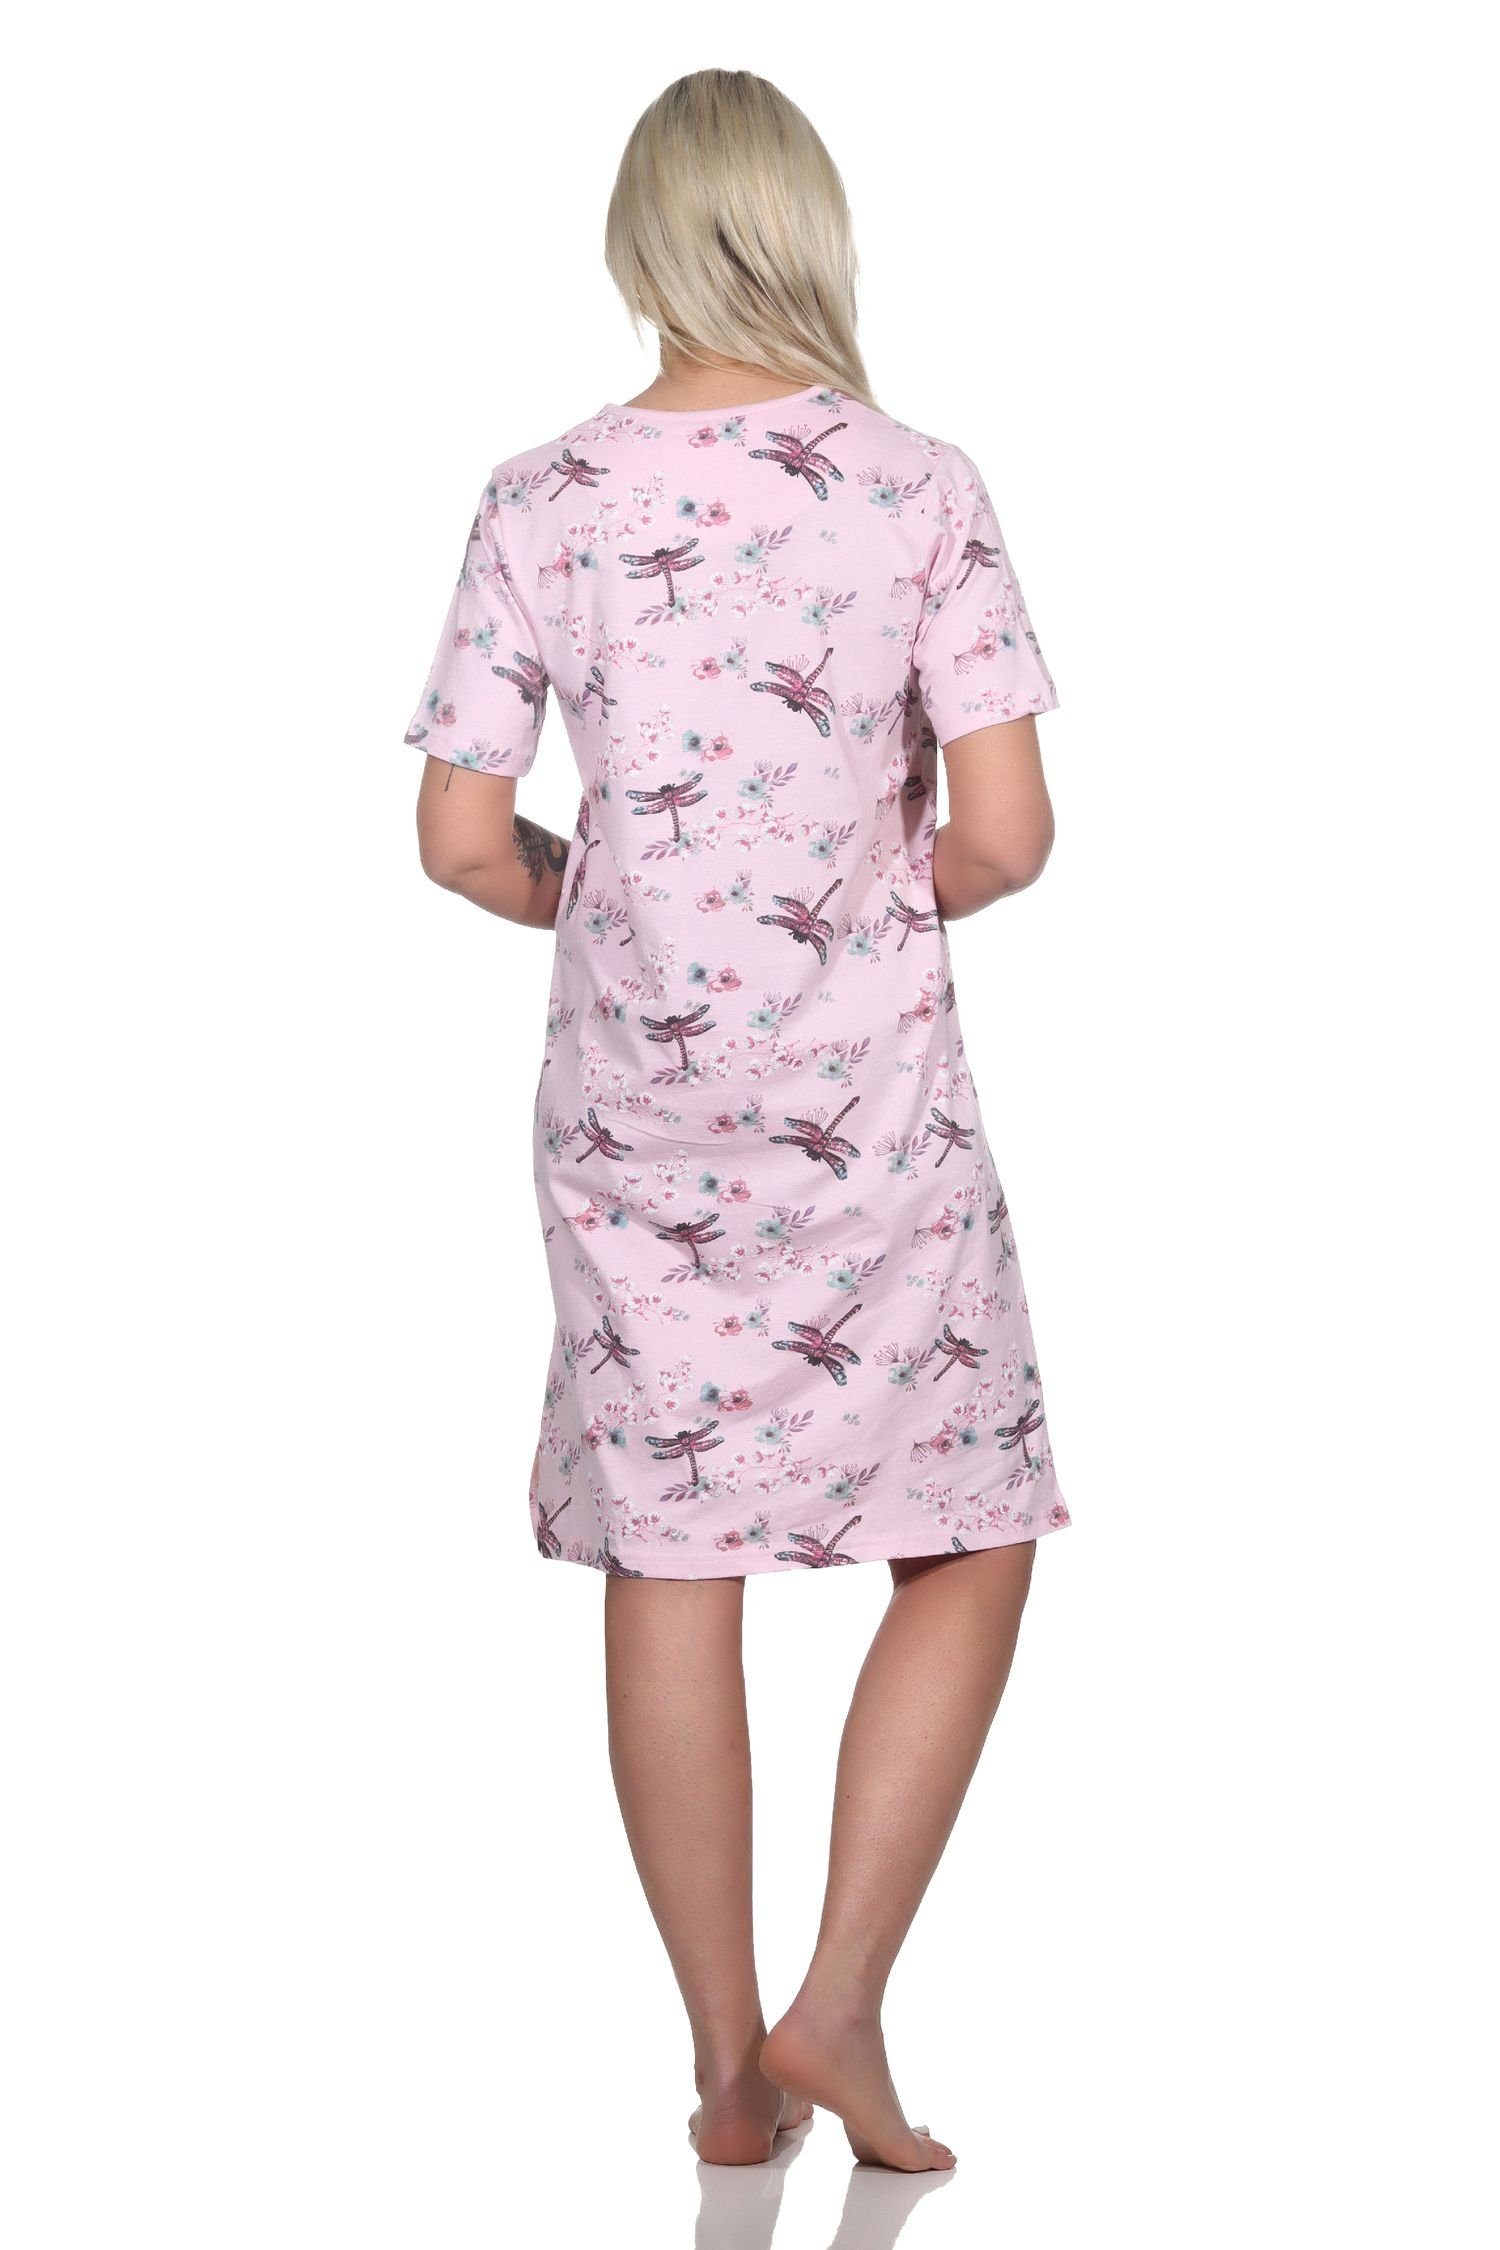 Normann Nachthemd Damen kurzarm und rosa floraler Hals Nachthemd Alloverprint am Knopfleiste